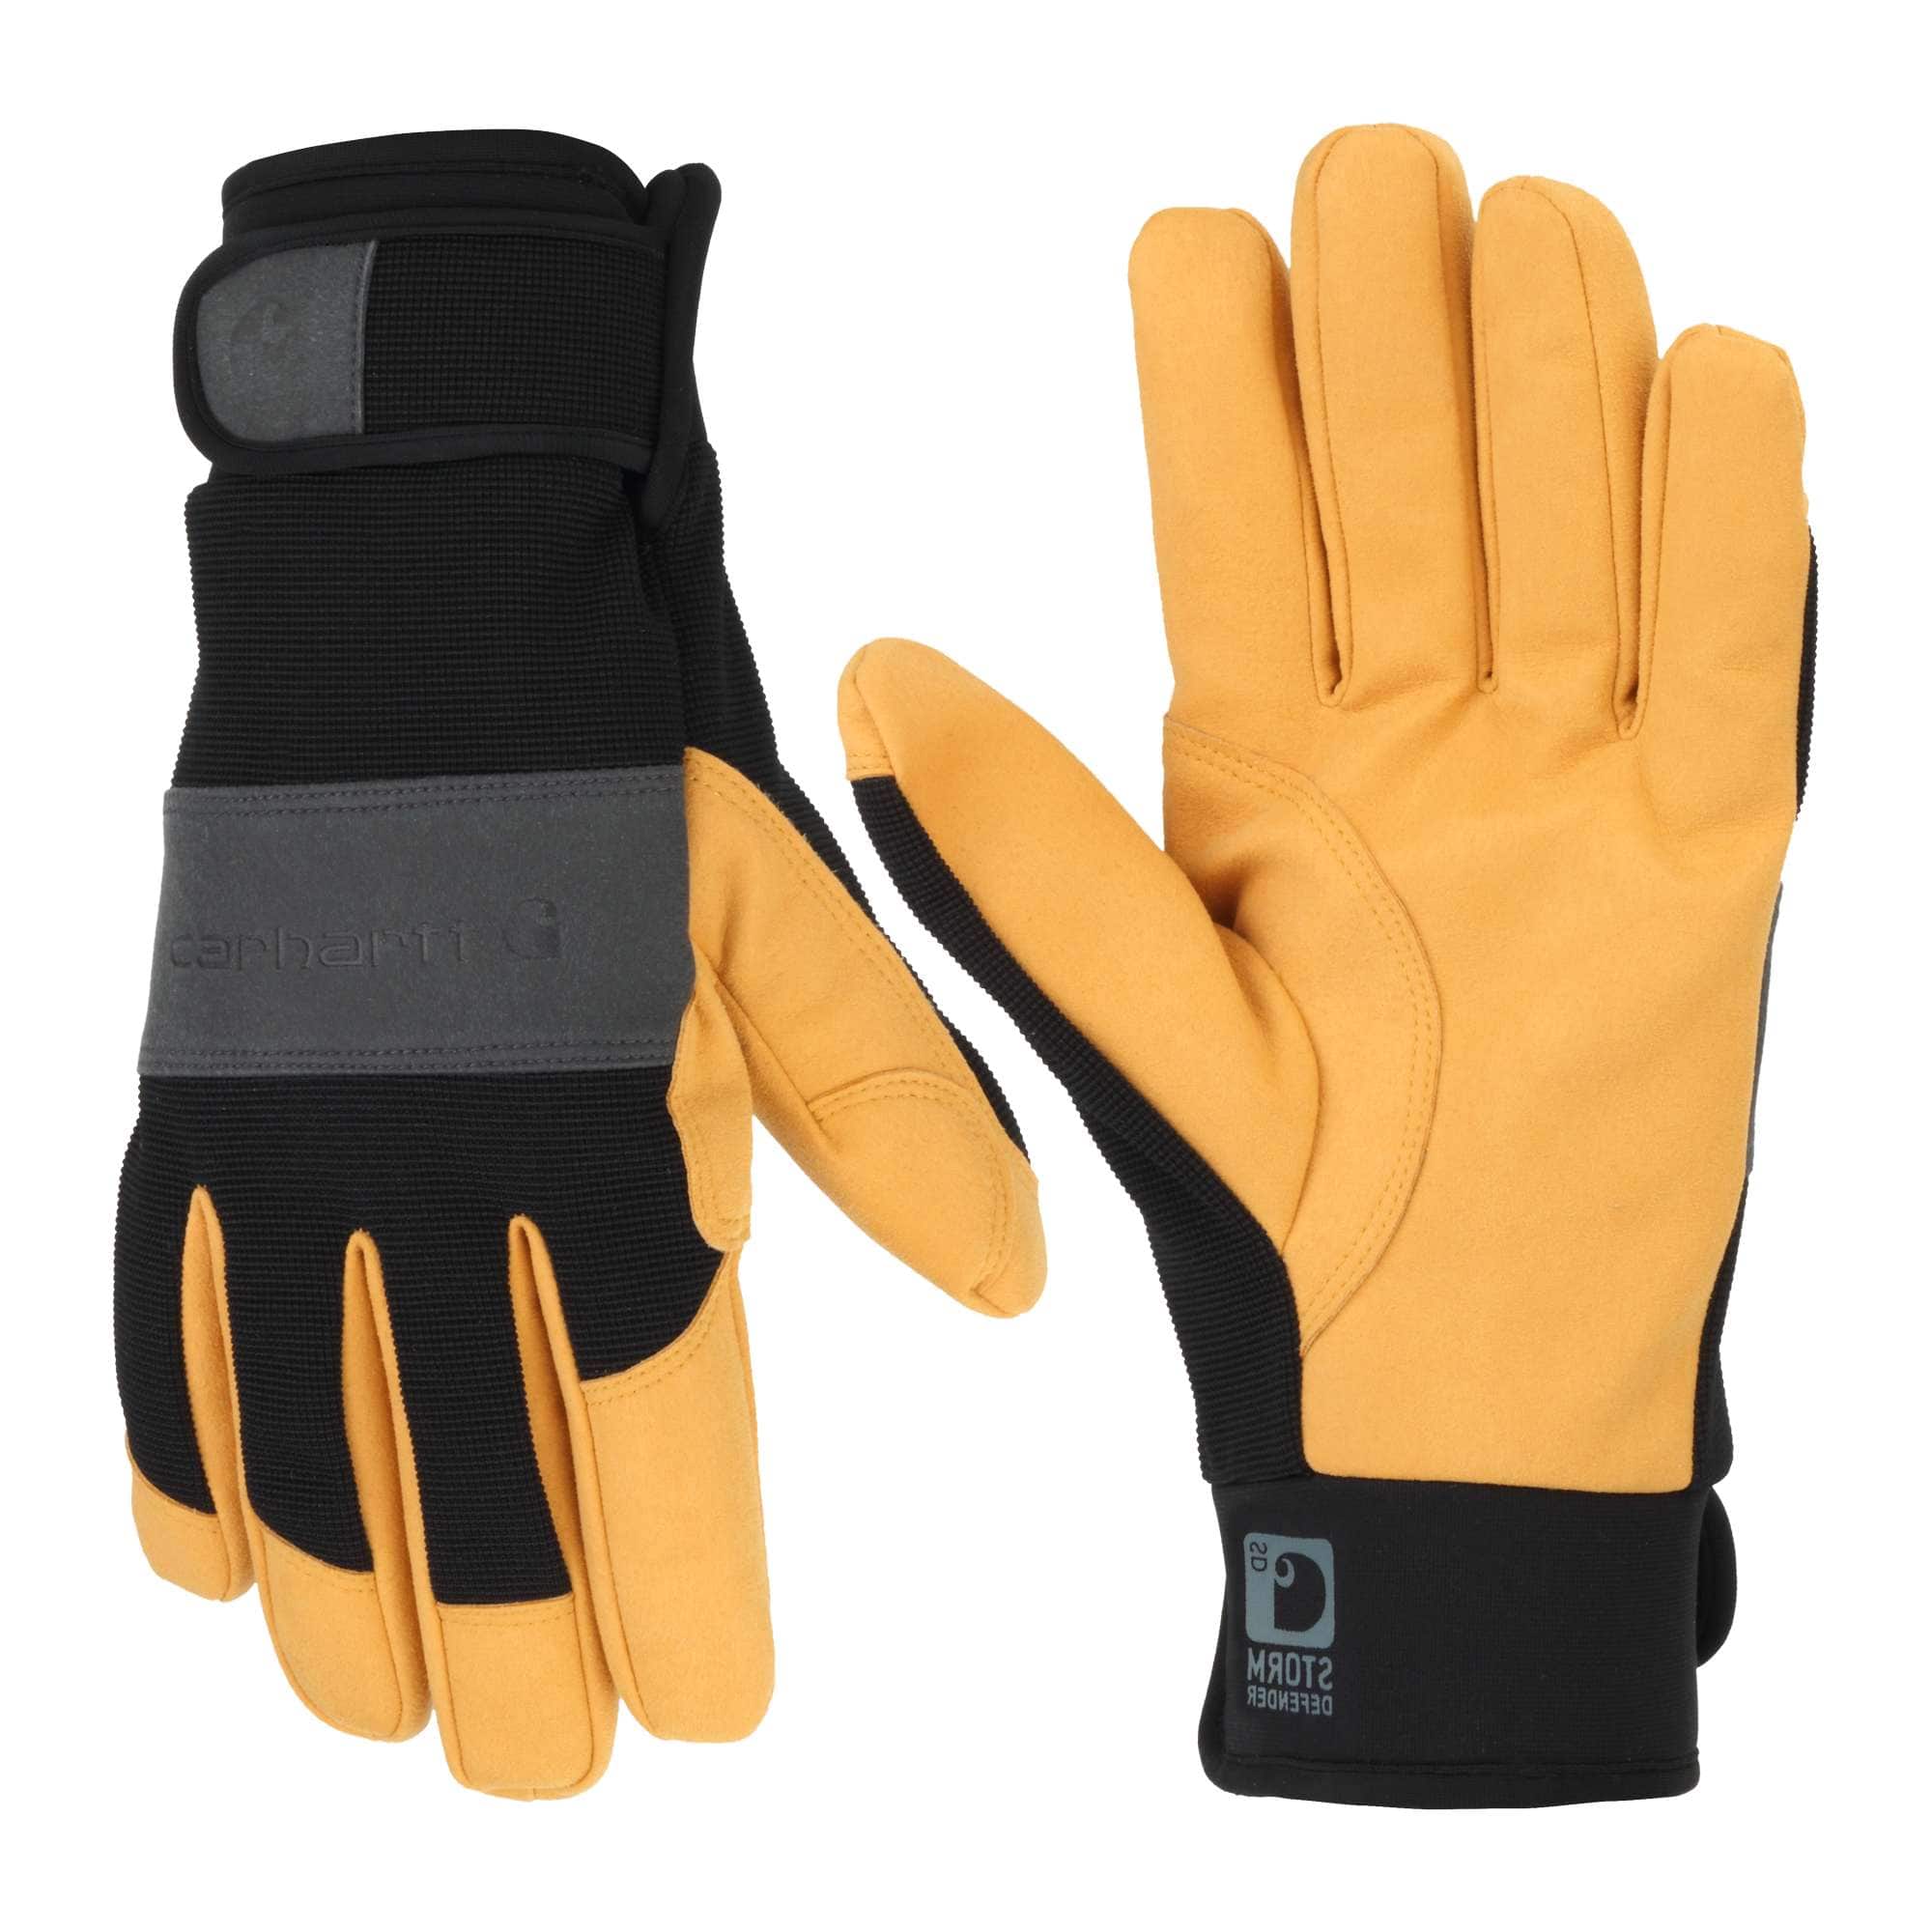 Waterproof Breathable High Dexterity Glove | Sale Clothing ...